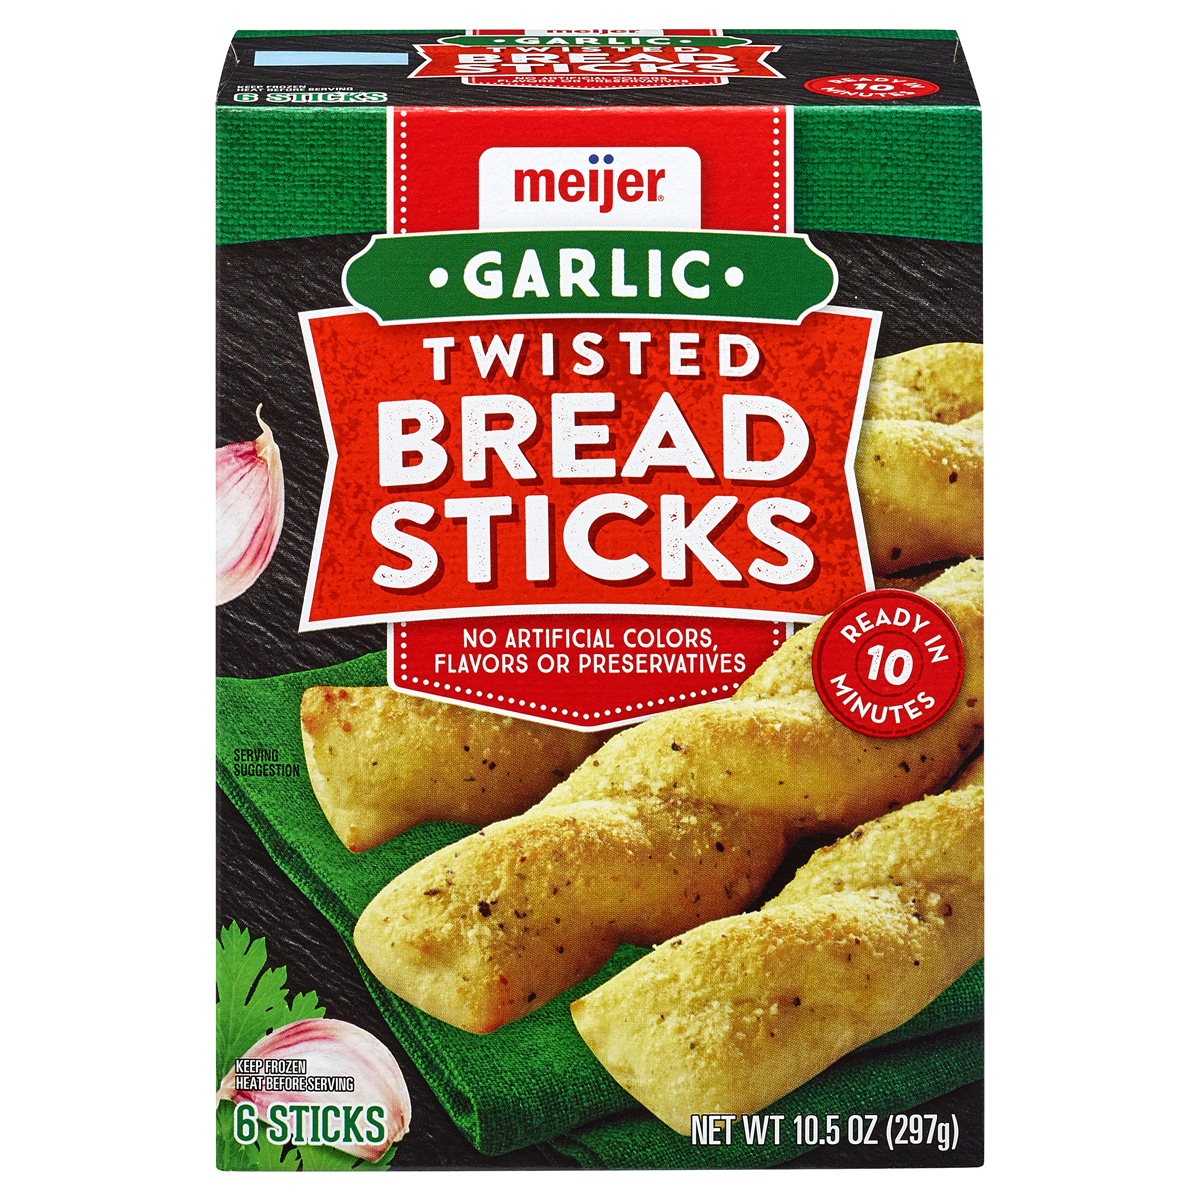 slide 1 of 13, Meijer Twisted Garlic Bread Sticks, 10.5 oz